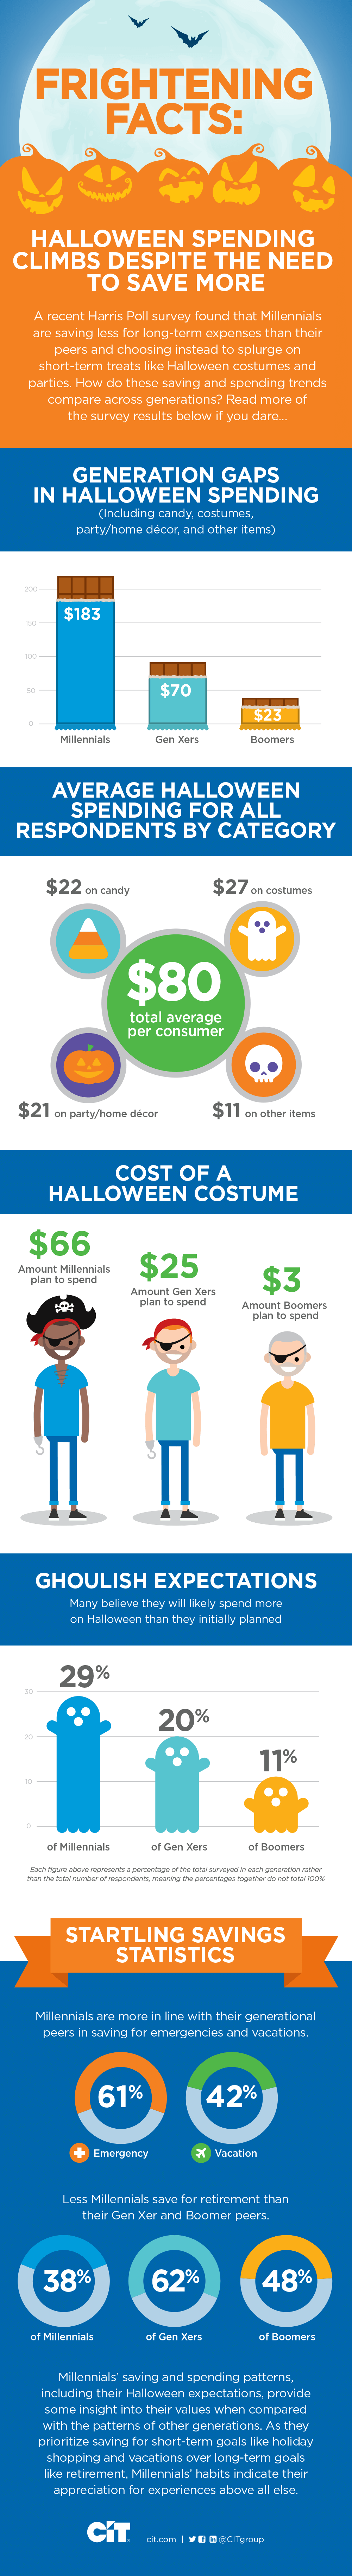 Frightening facts: Millennial Halloween spending climbs despite need to save 